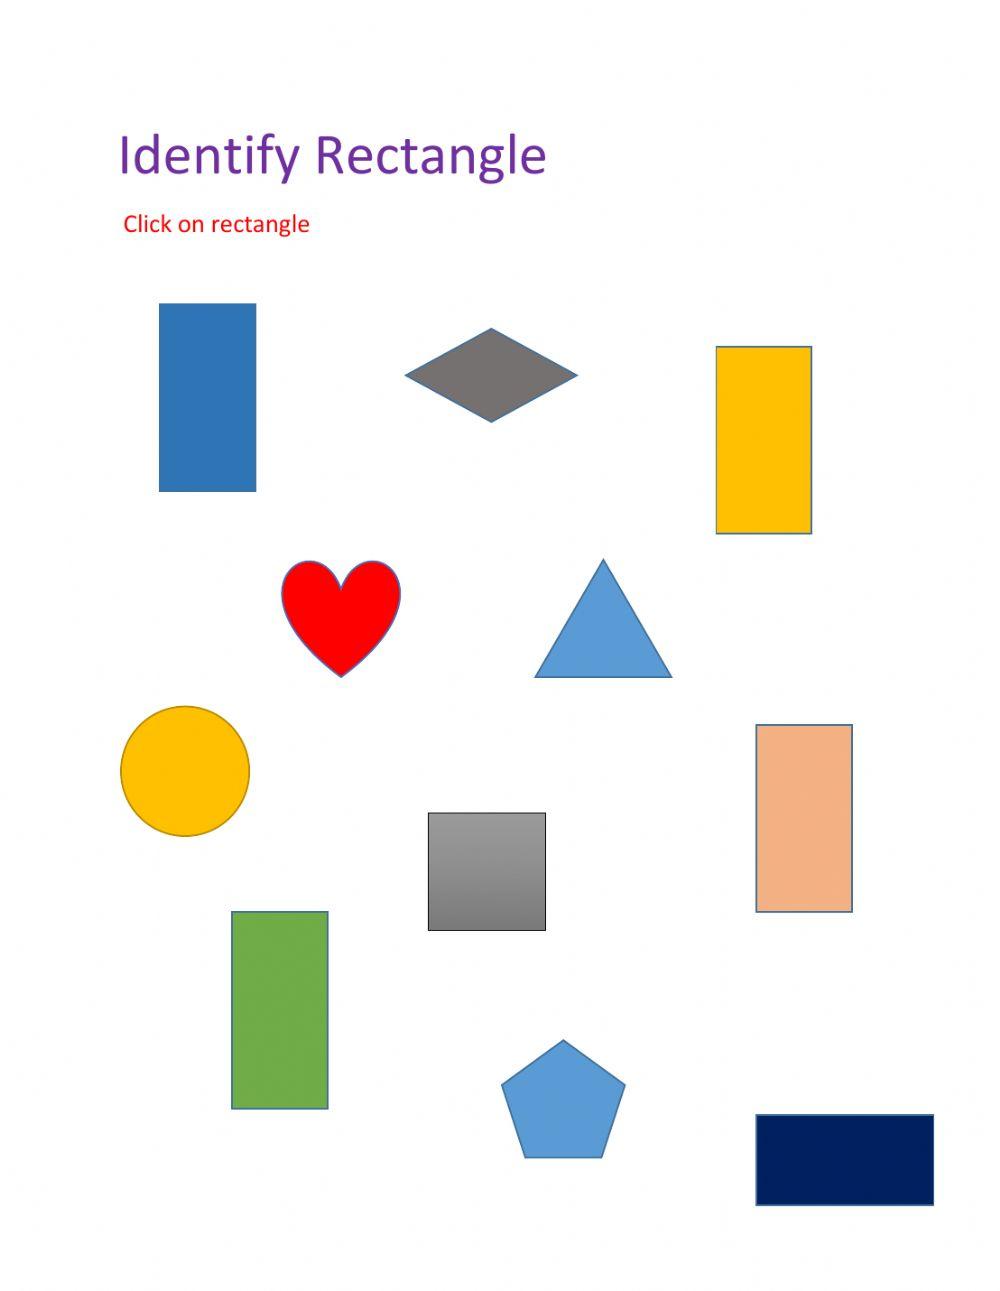 Identify rectangle